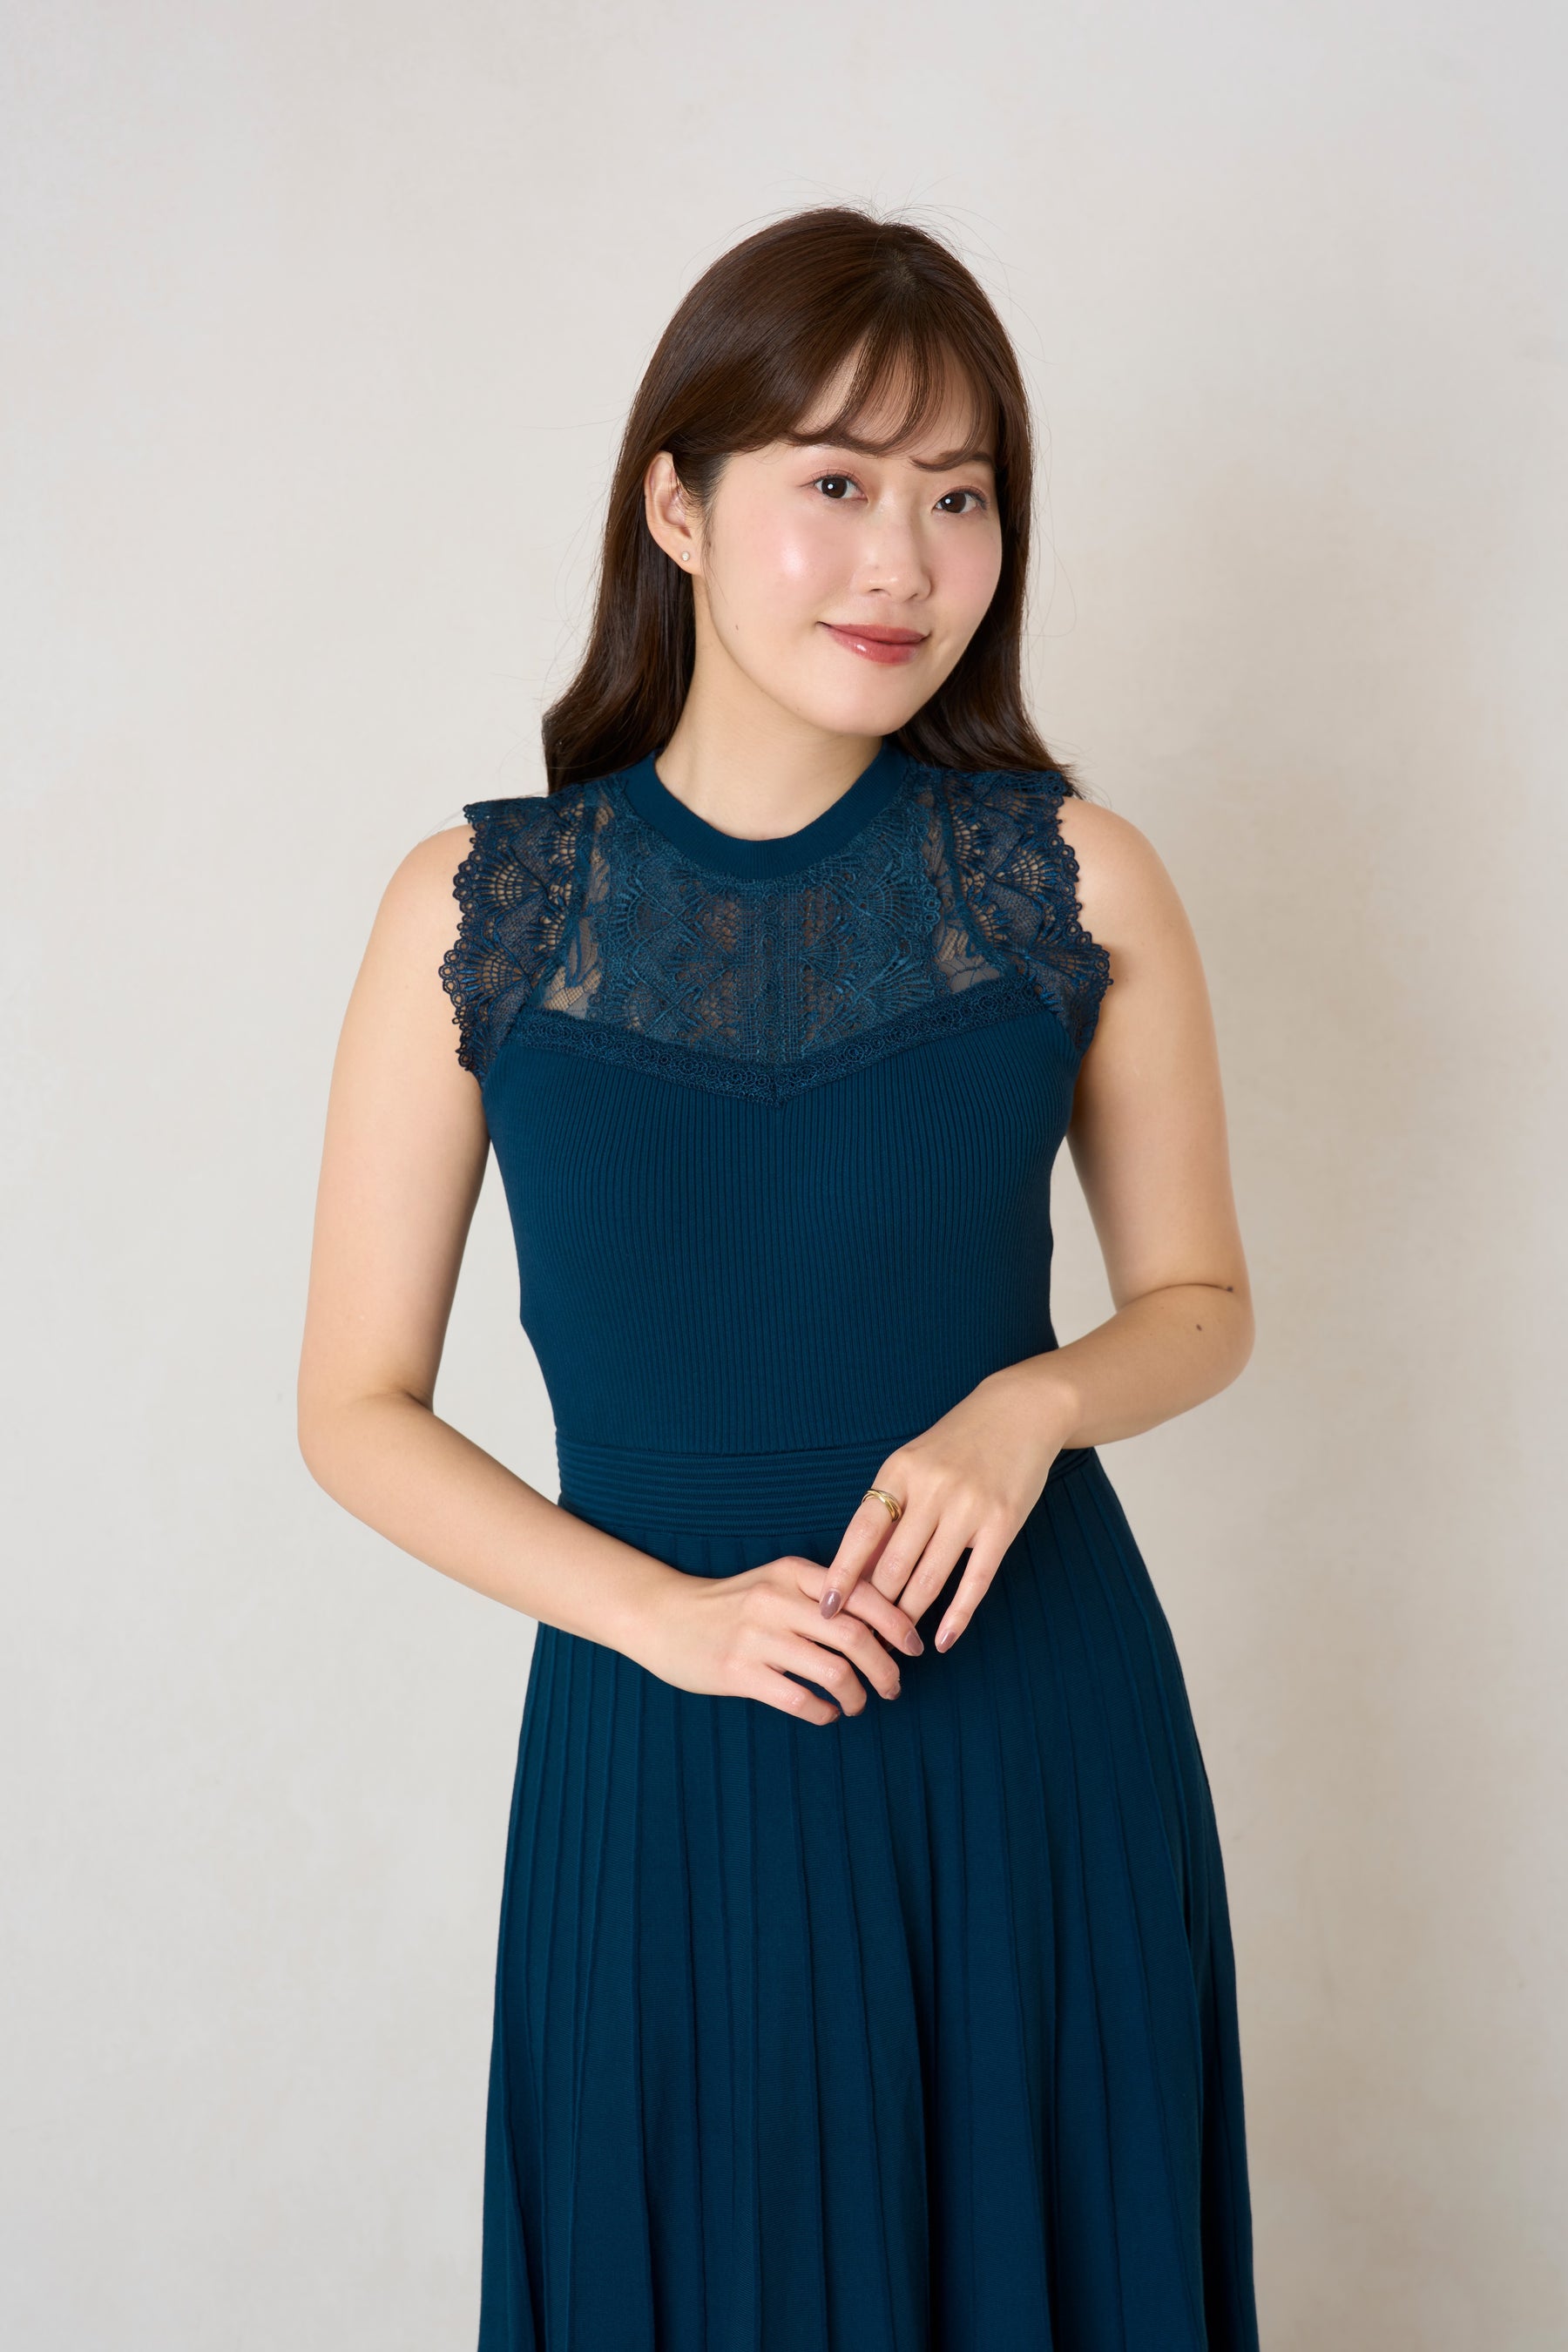 Pleated Lace Knit Dress